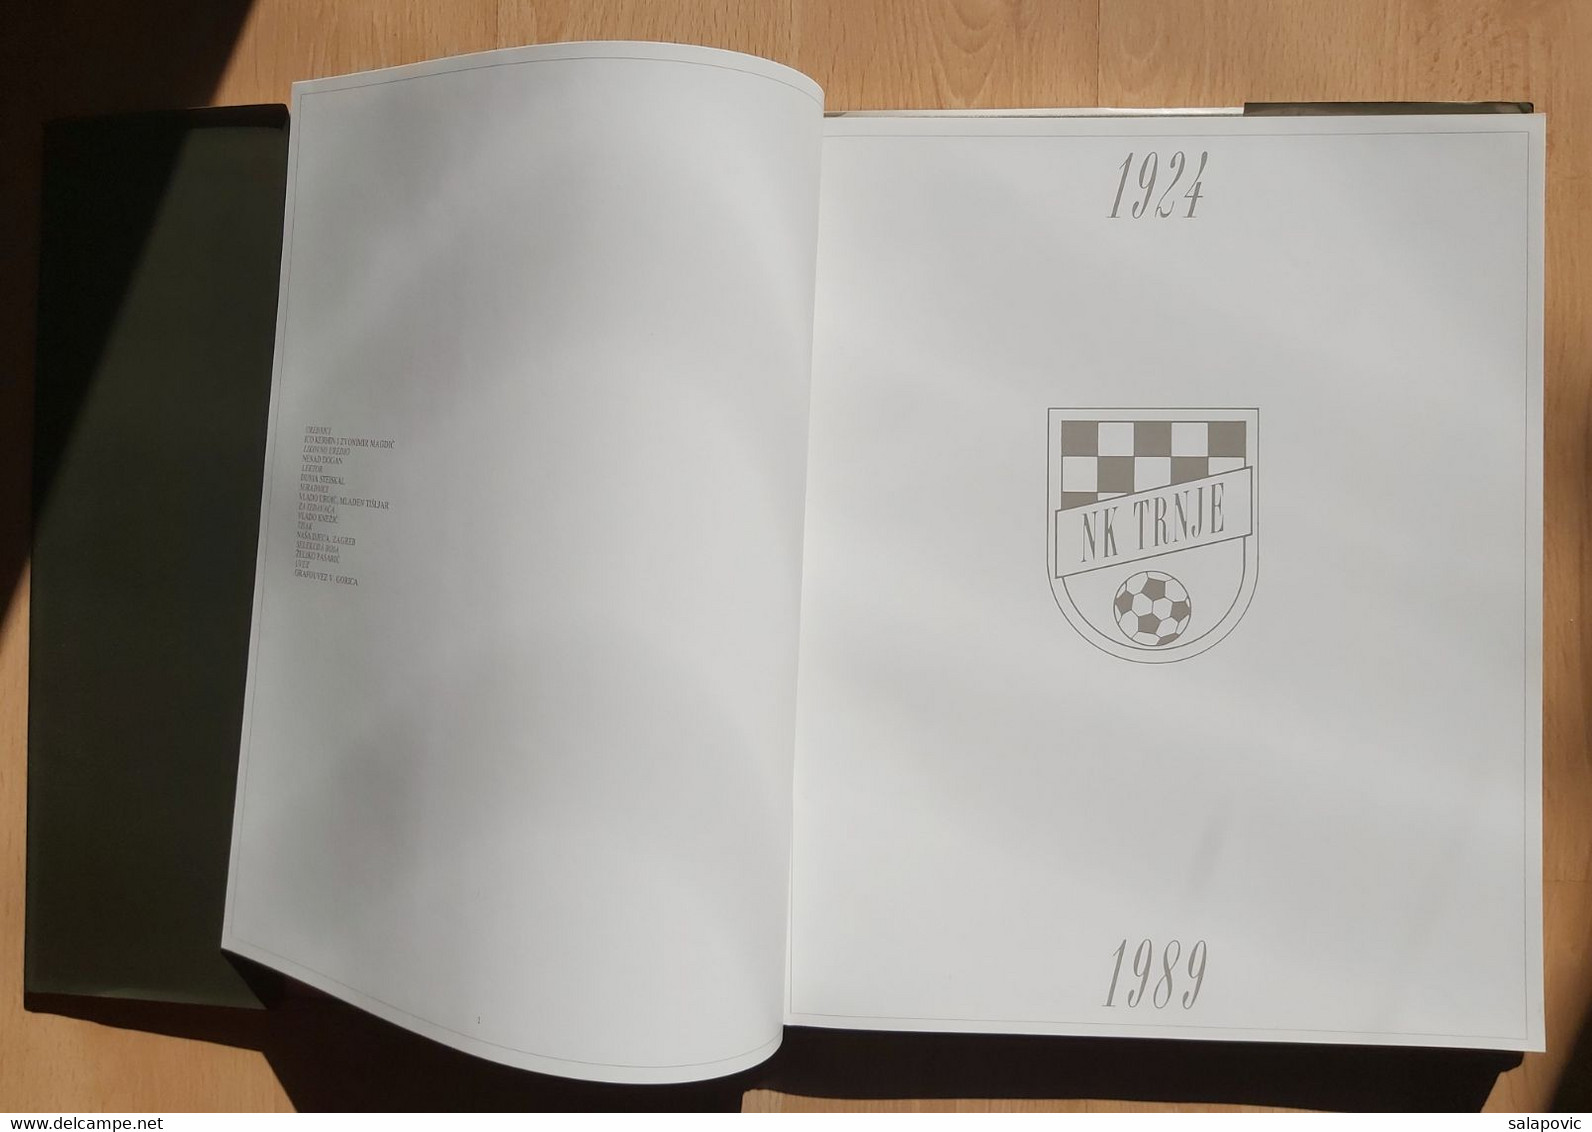 NK Trnje 1924-1989 Football Club, Croatia - Libros